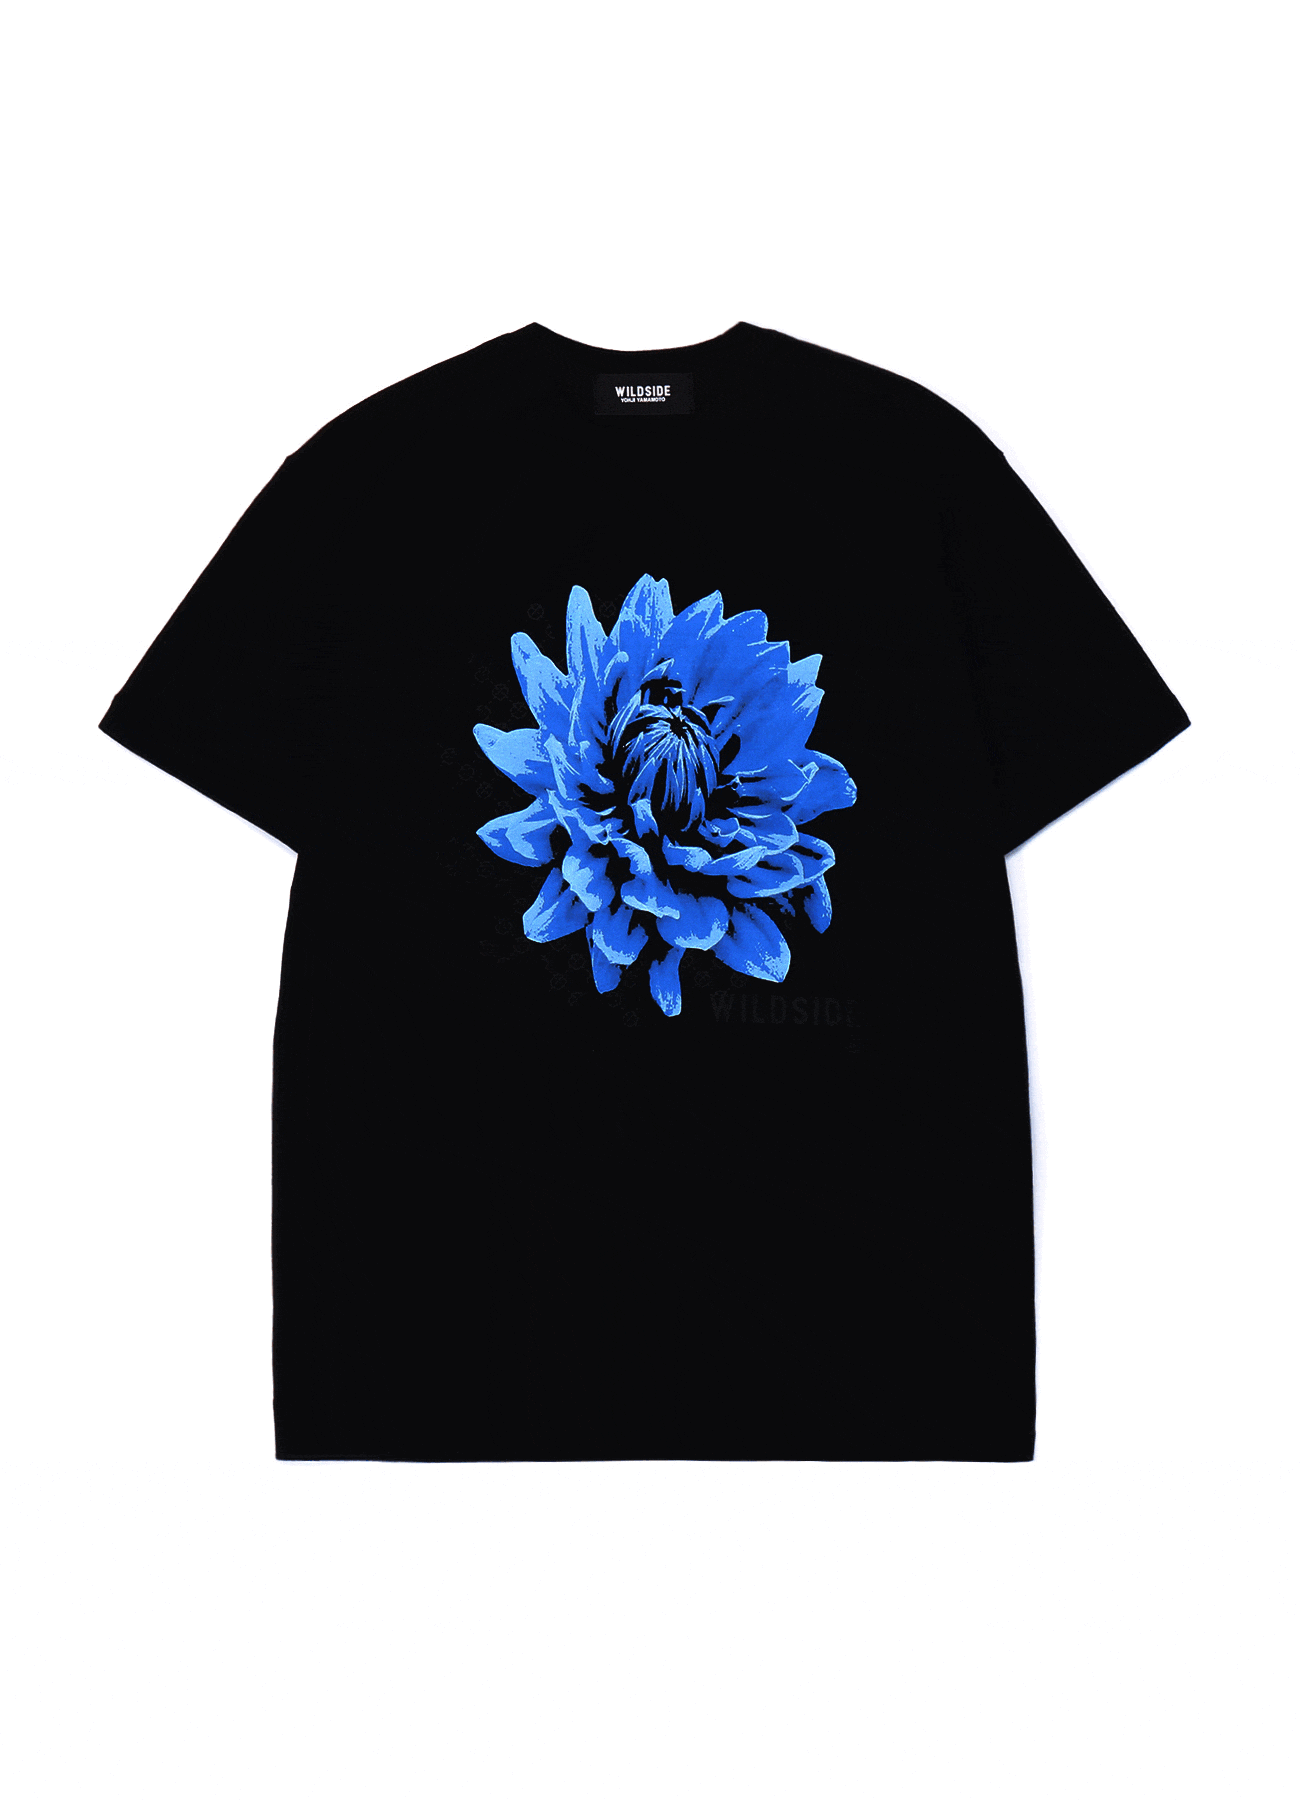 WILDSIDE × CHIVAS REGAL BLUE FLOWER T-Shirt